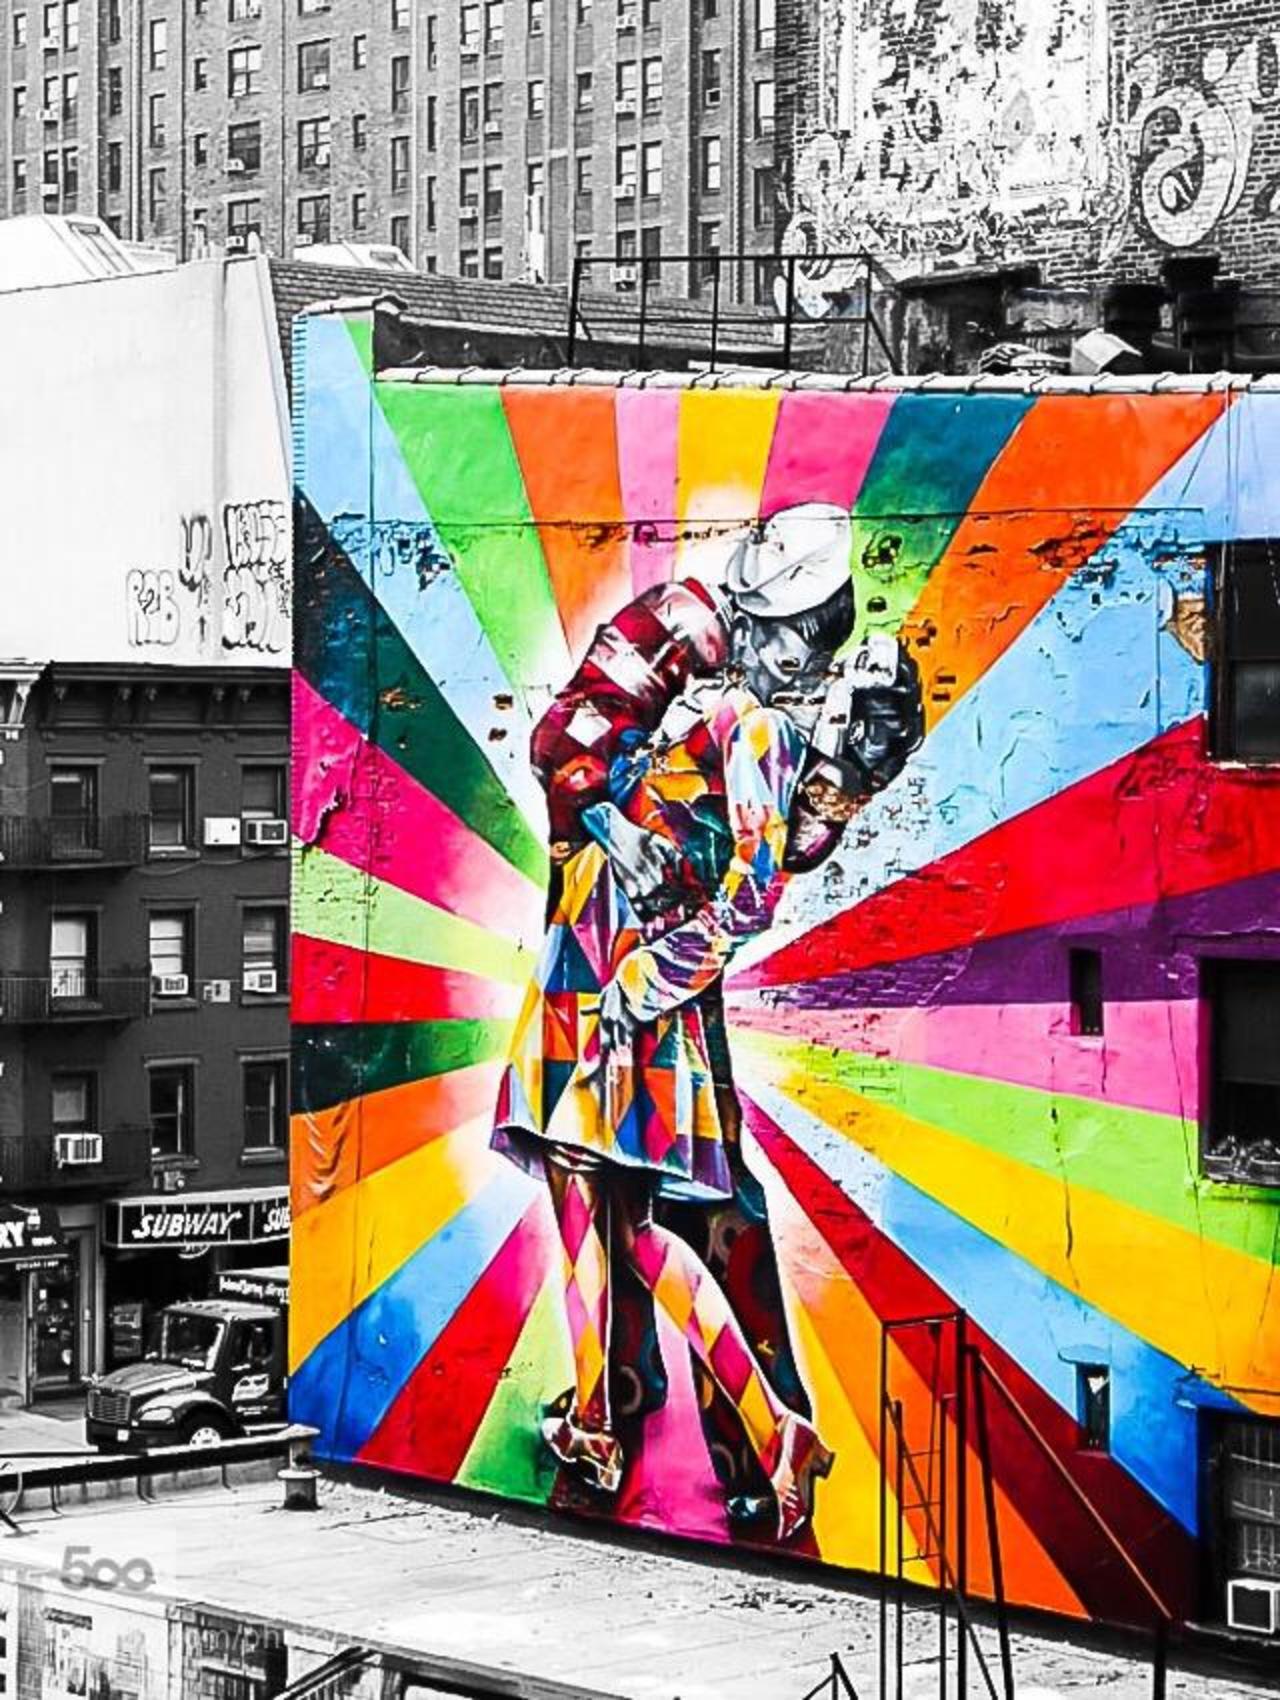 New York City by ... - http://www.covergap.com/new-york-city-by-jtfontaine97-2/ #Beautiful #Graffiti #NewYork #SelectiveColoring #StreetArt http://t.co/0IXAv9X70F